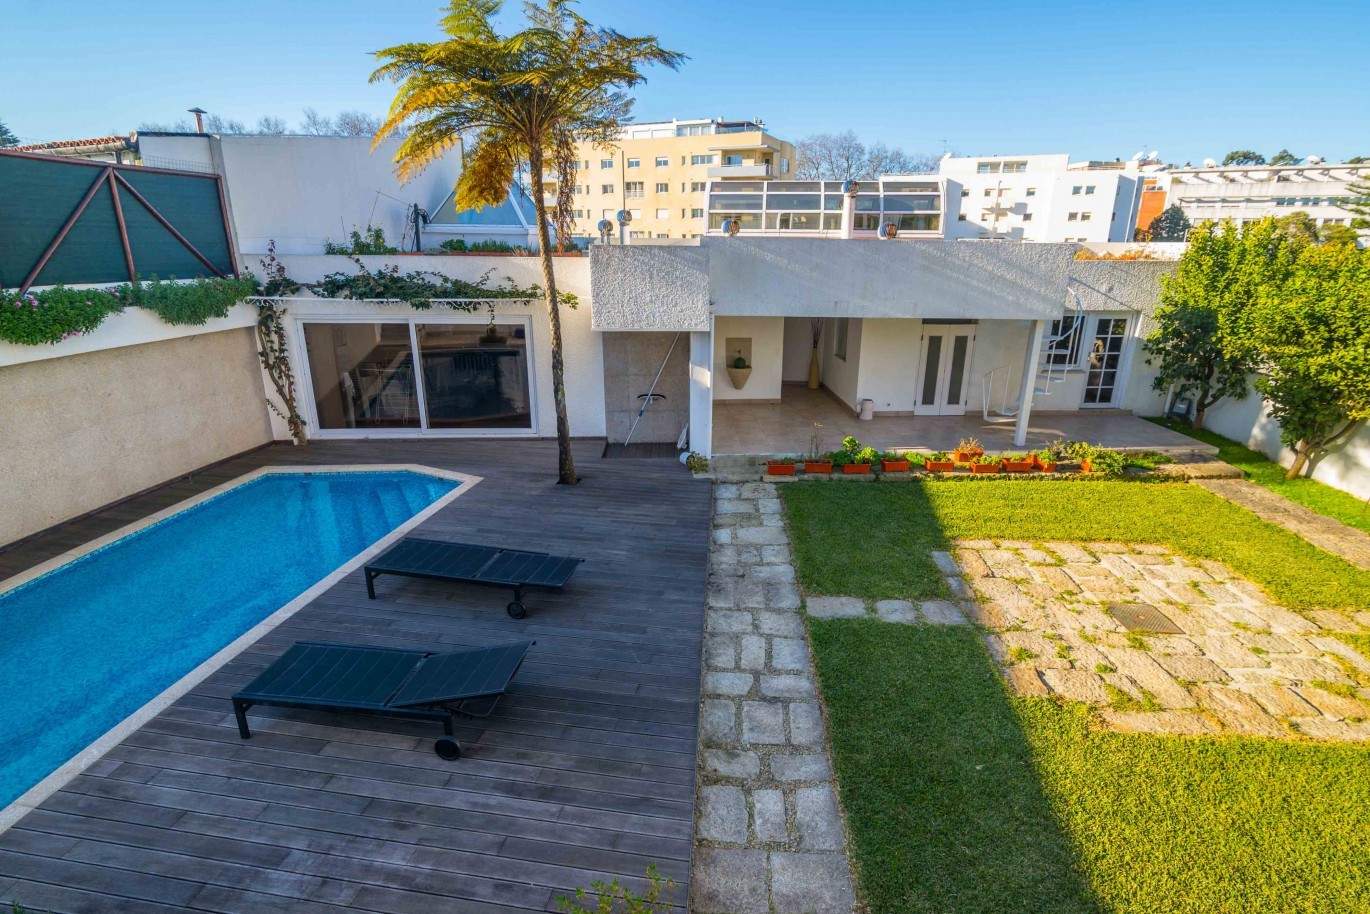 Villa para venta con piscina, Senhora da Hora, Porto, Portugal_94440